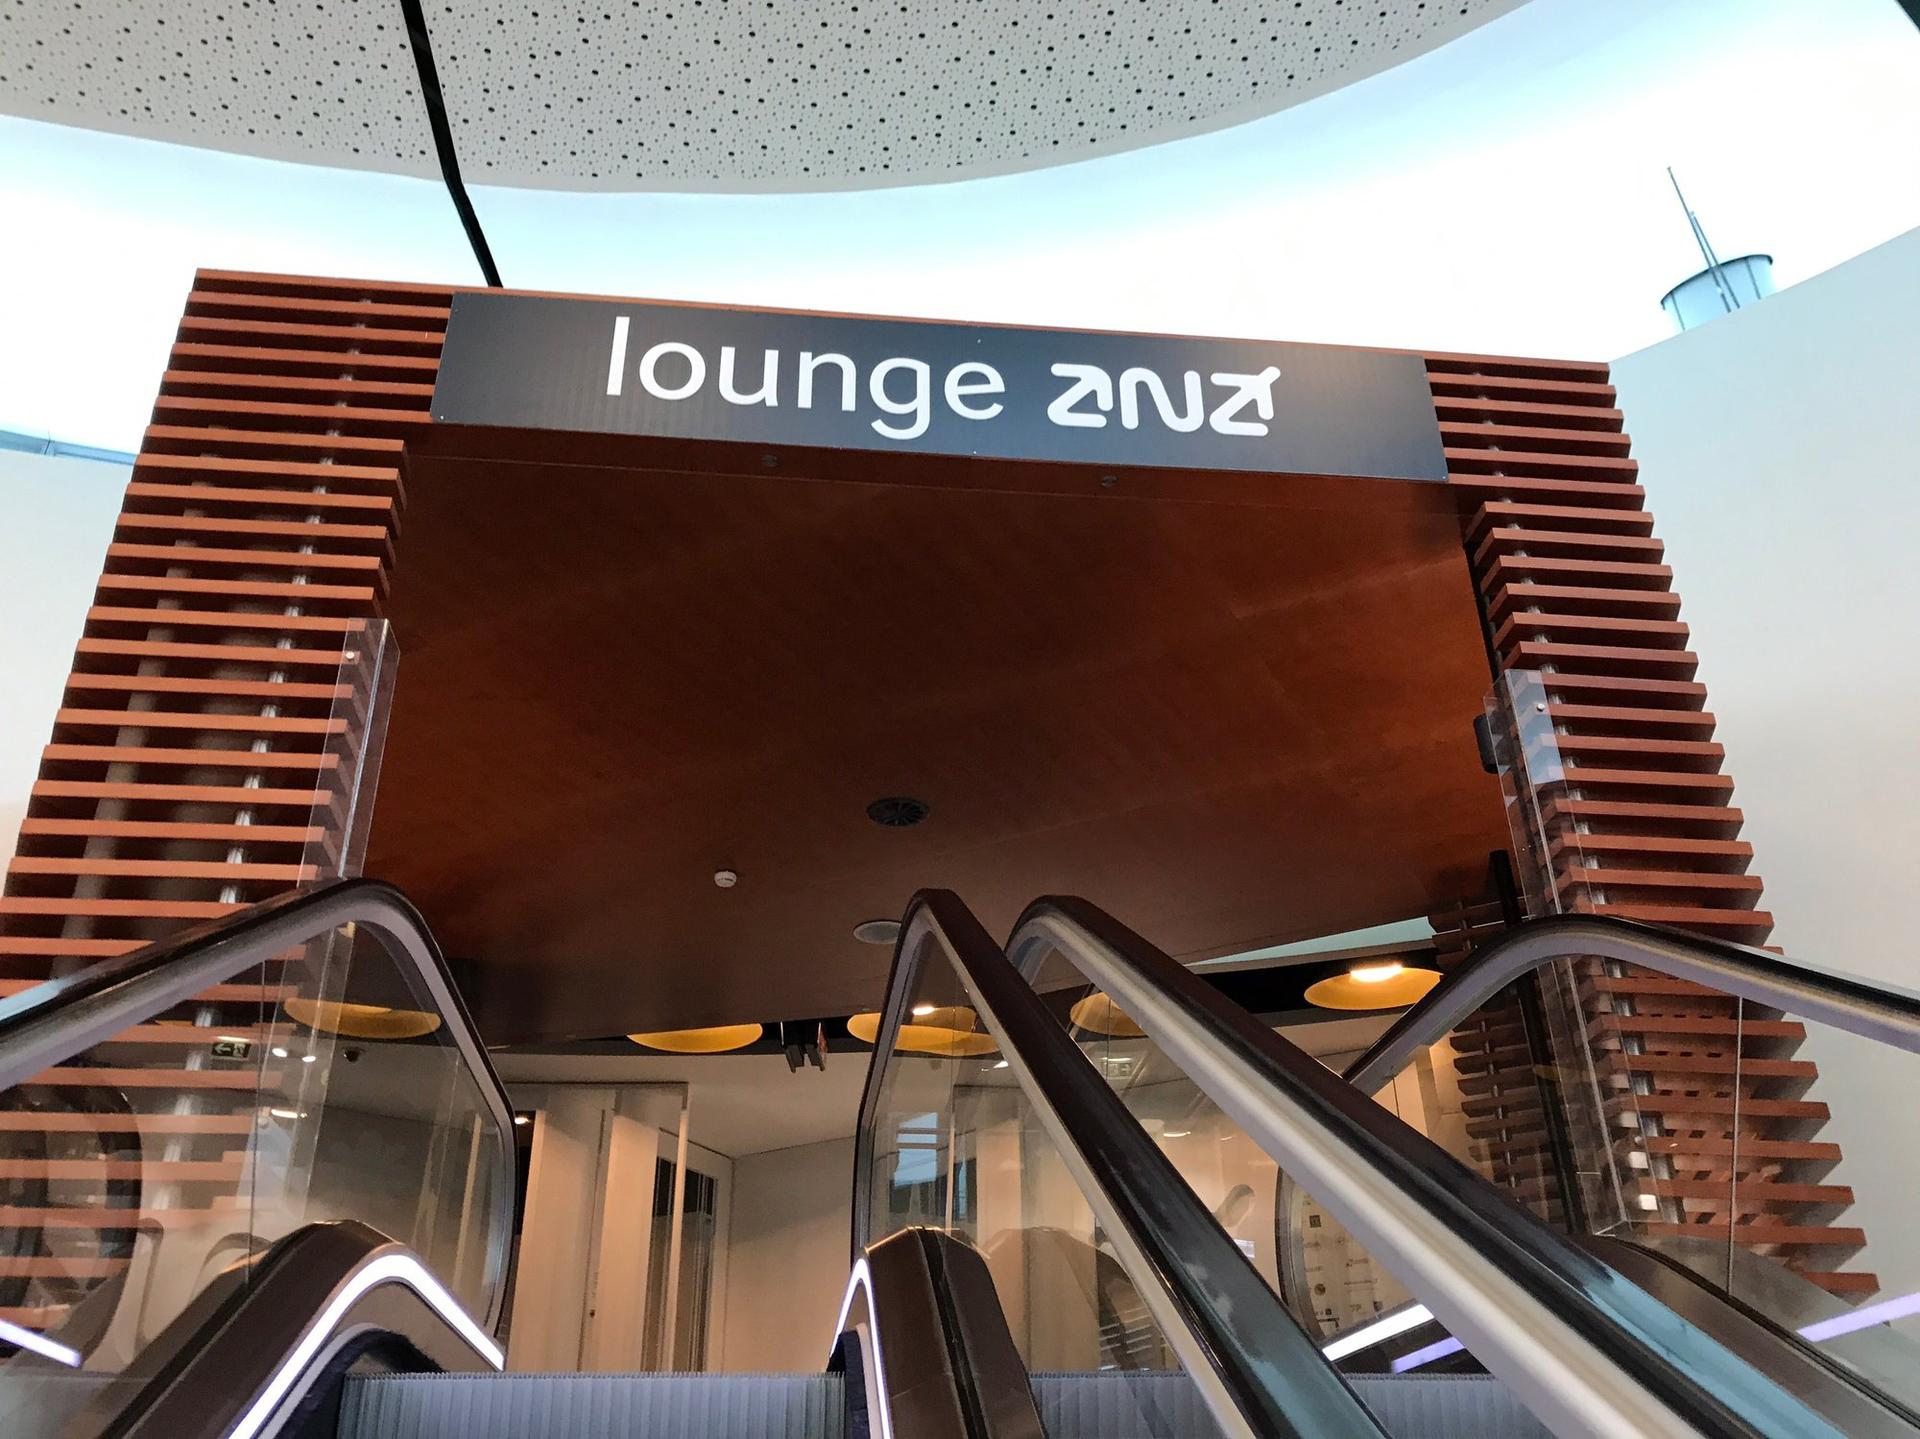 ANA Airport Lounge image 15 of 49